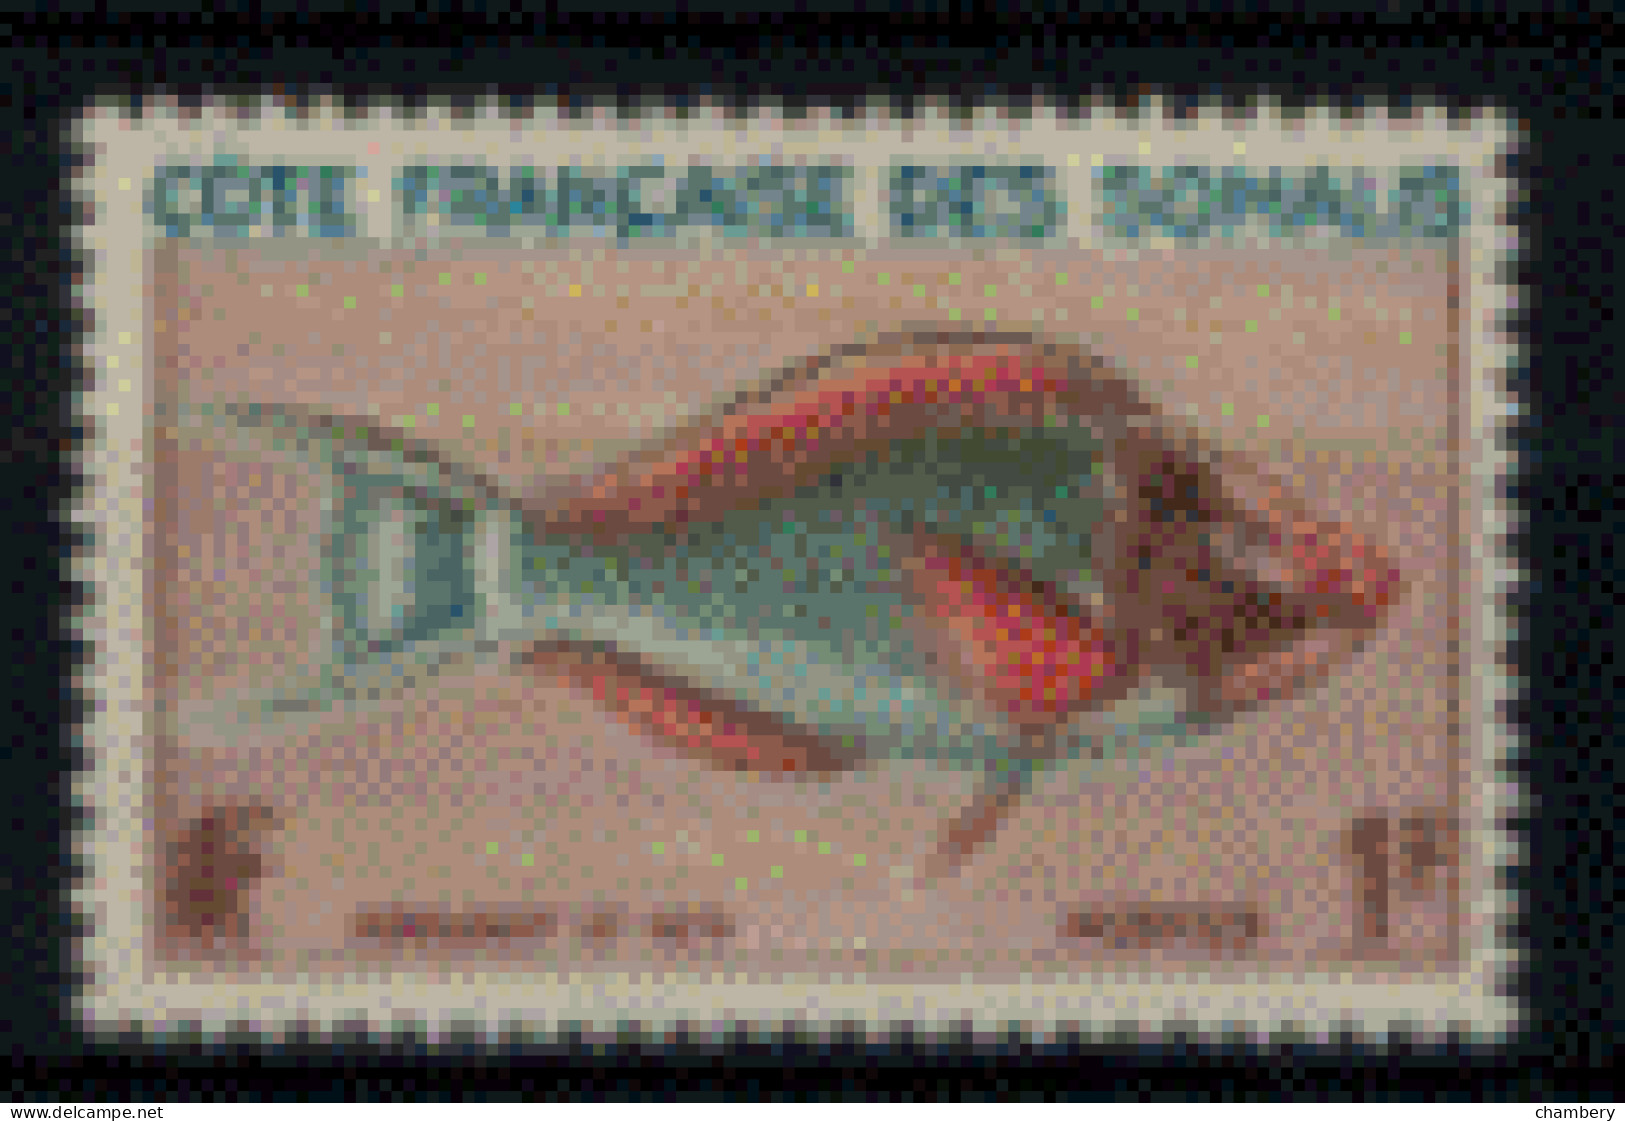 France - Somalies - "Poisson : Perroquet De Mer" - Neuf 1* N° 292 De 1959/60 - Neufs